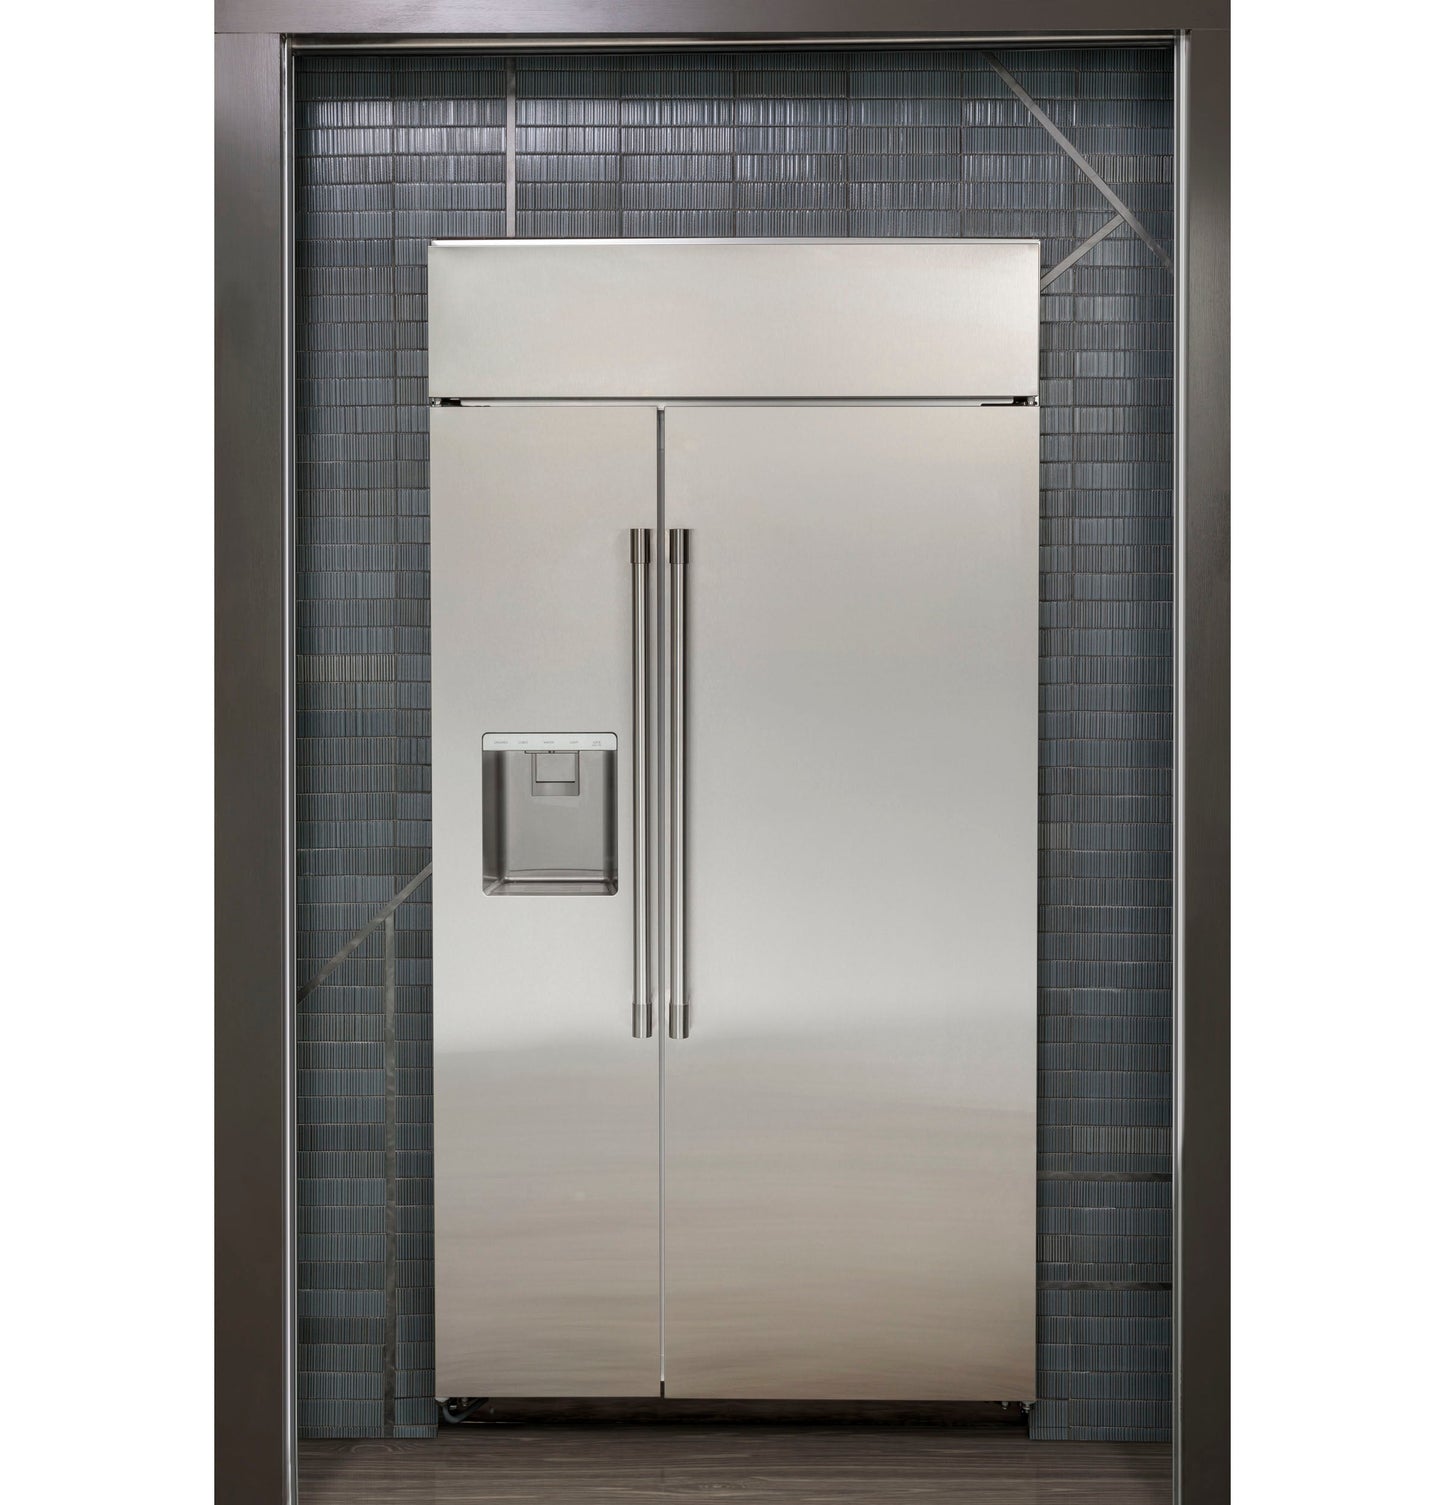 Monogram 36" Built In Side By Side Stainless Steel Dispenser Refrigerator - ZISS360DNSS